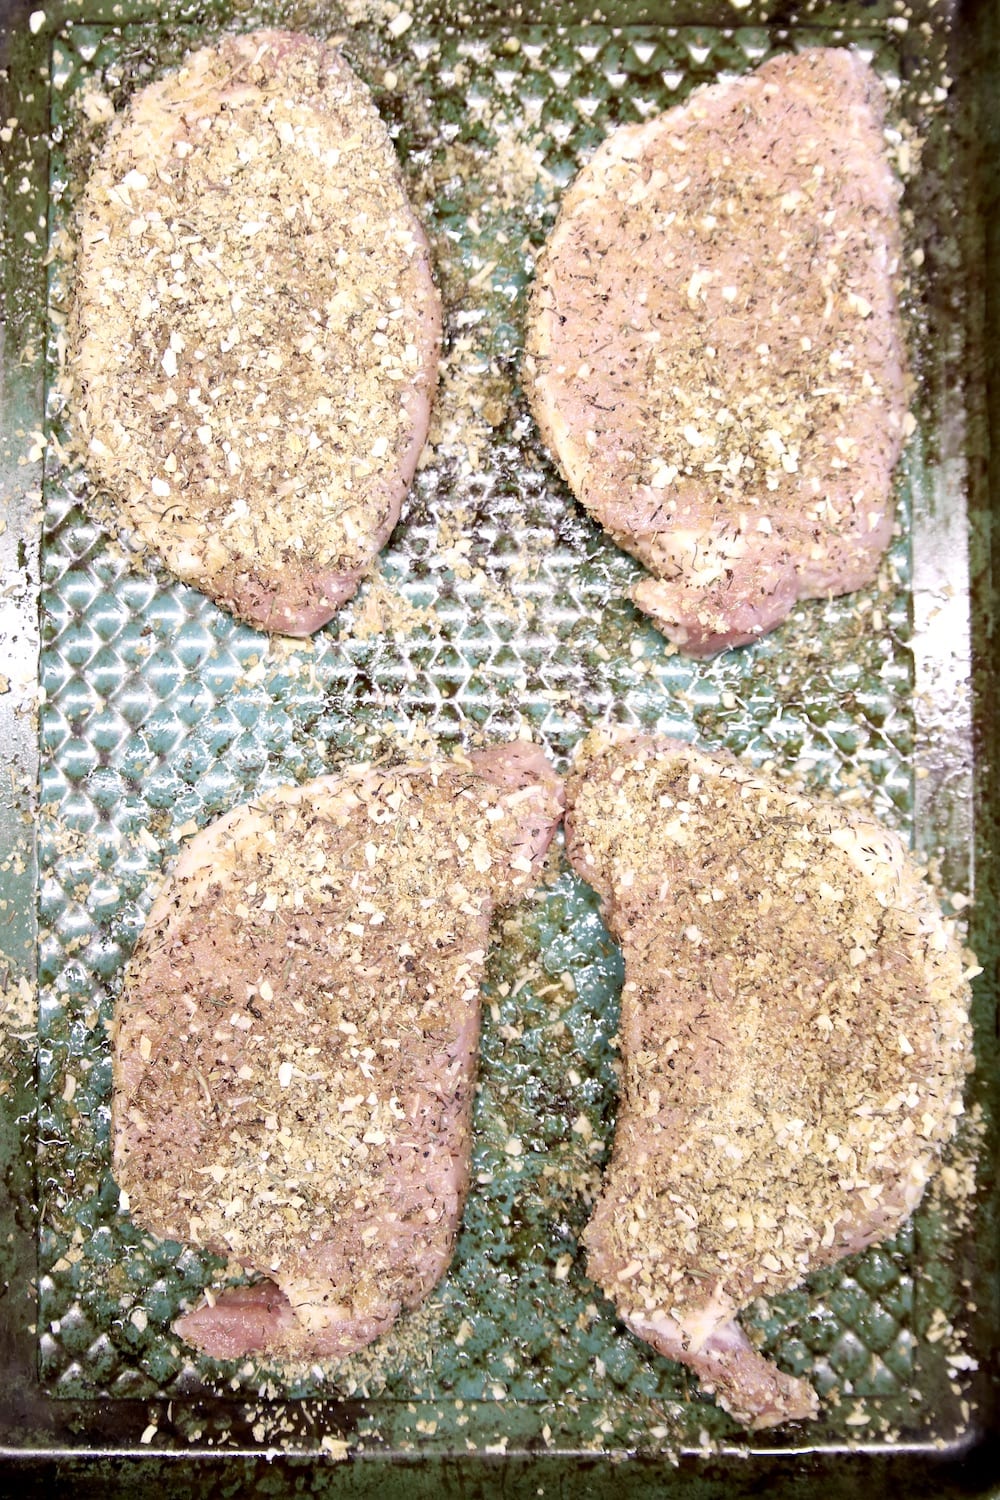 4 pork chops on a baking sheet seasoned with dry rub